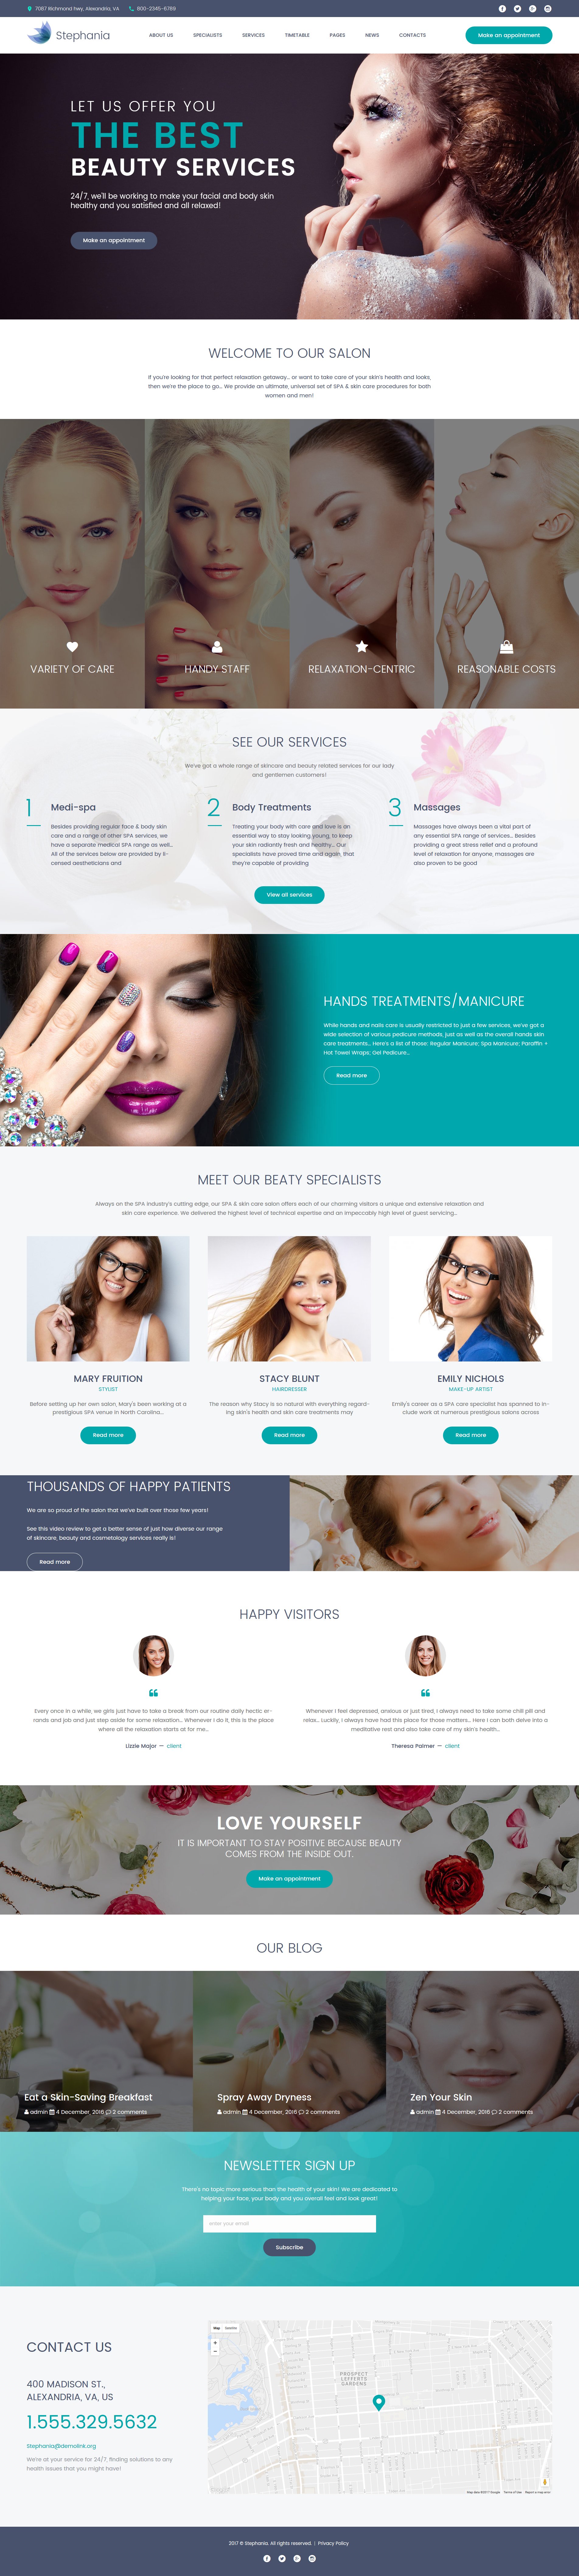 Stephania - Beauty Salon & Skin Care WordPress Theme